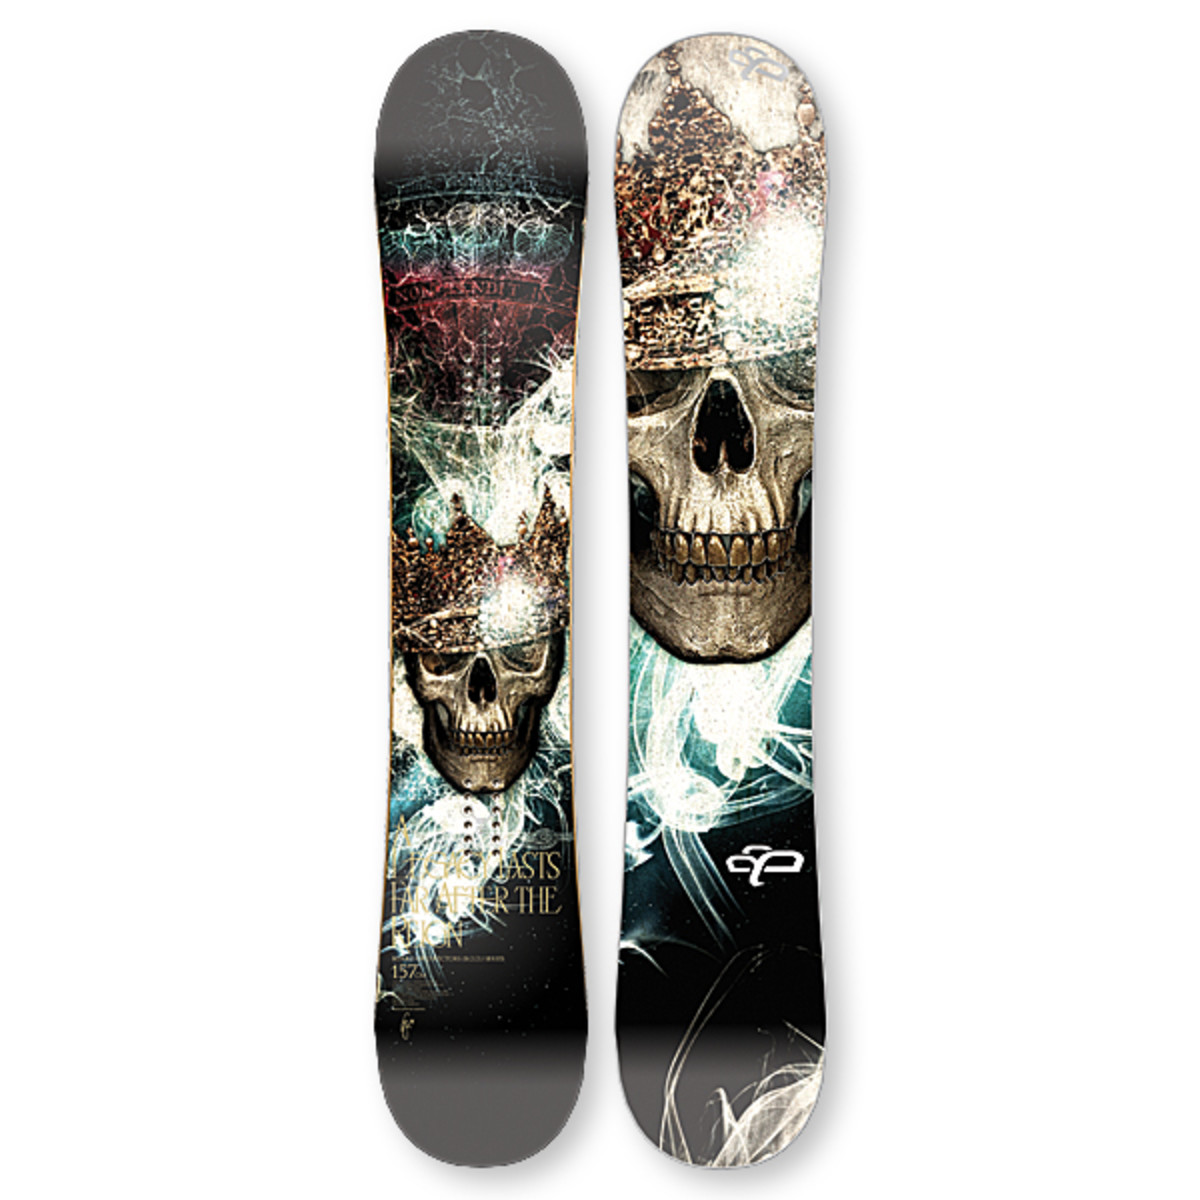 Buy Endeavor Board of Directors Series Snowboard - Shop for Snowboard Gear at Snowboarder Magazine